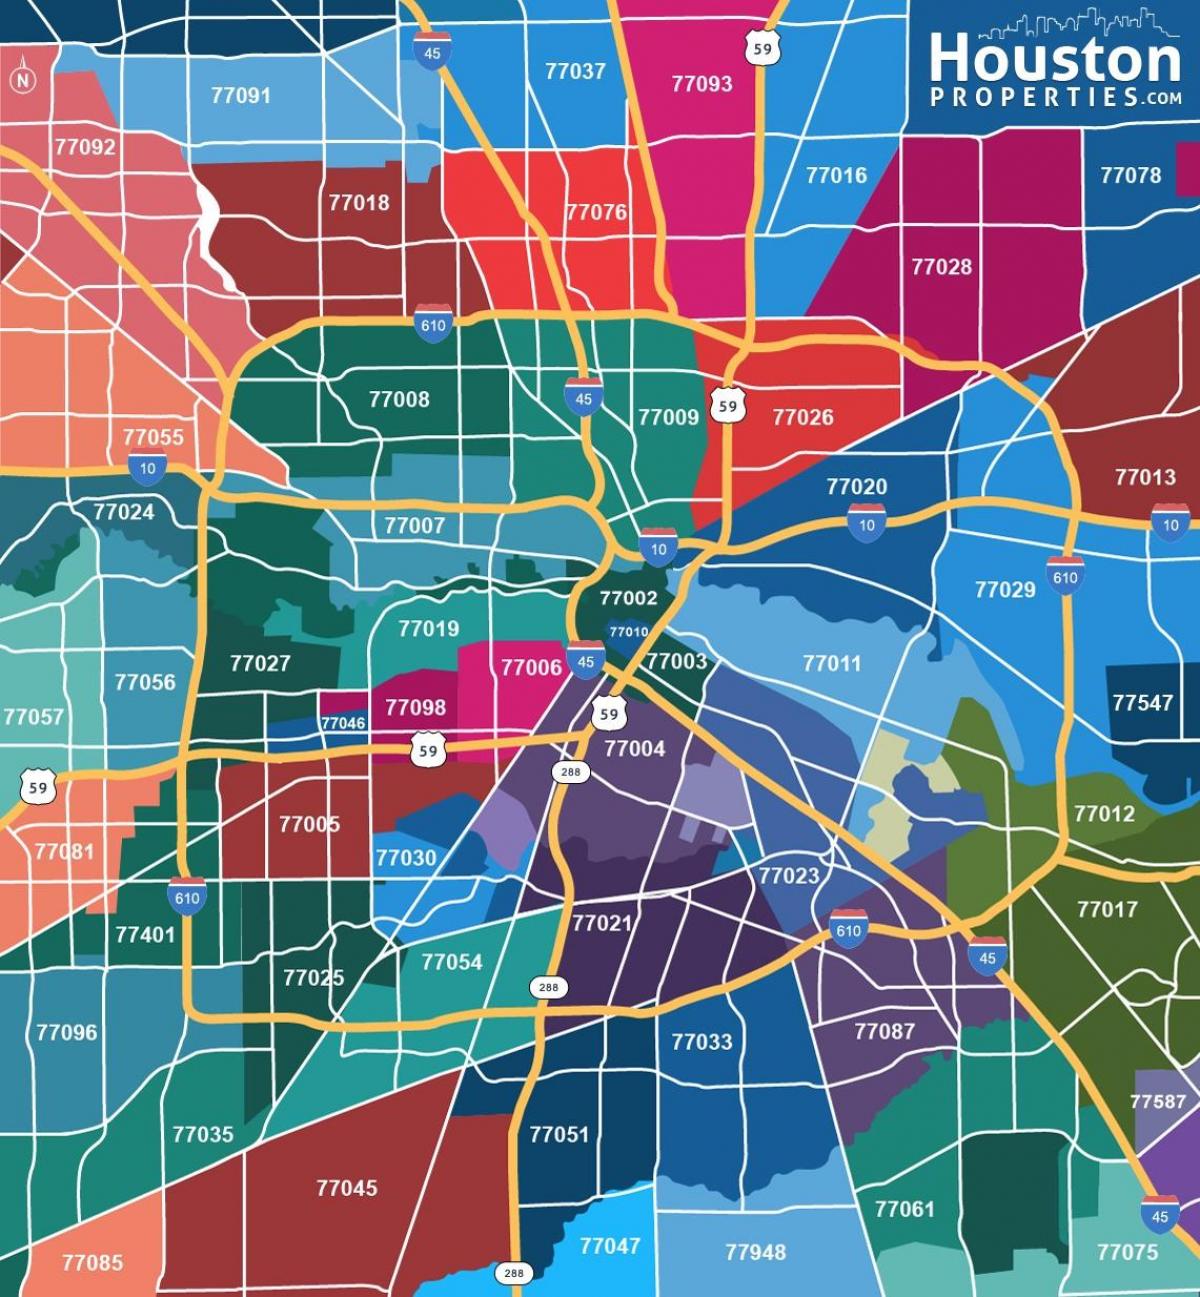 Houston suburbs map - Map of Houston suburbs (Texas - USA)